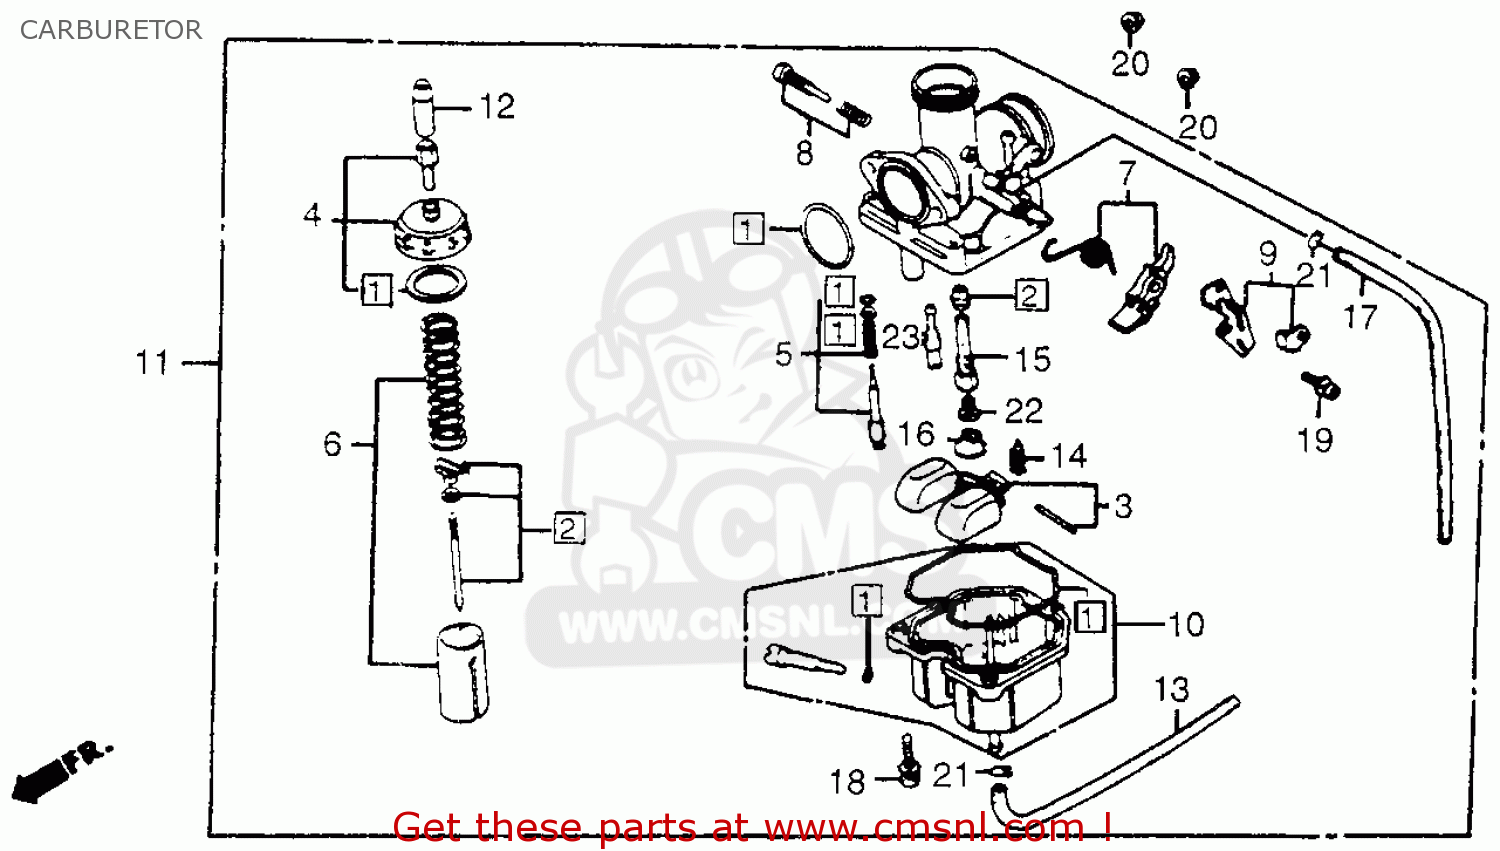 1984 Honda trx 200 carburetor #6